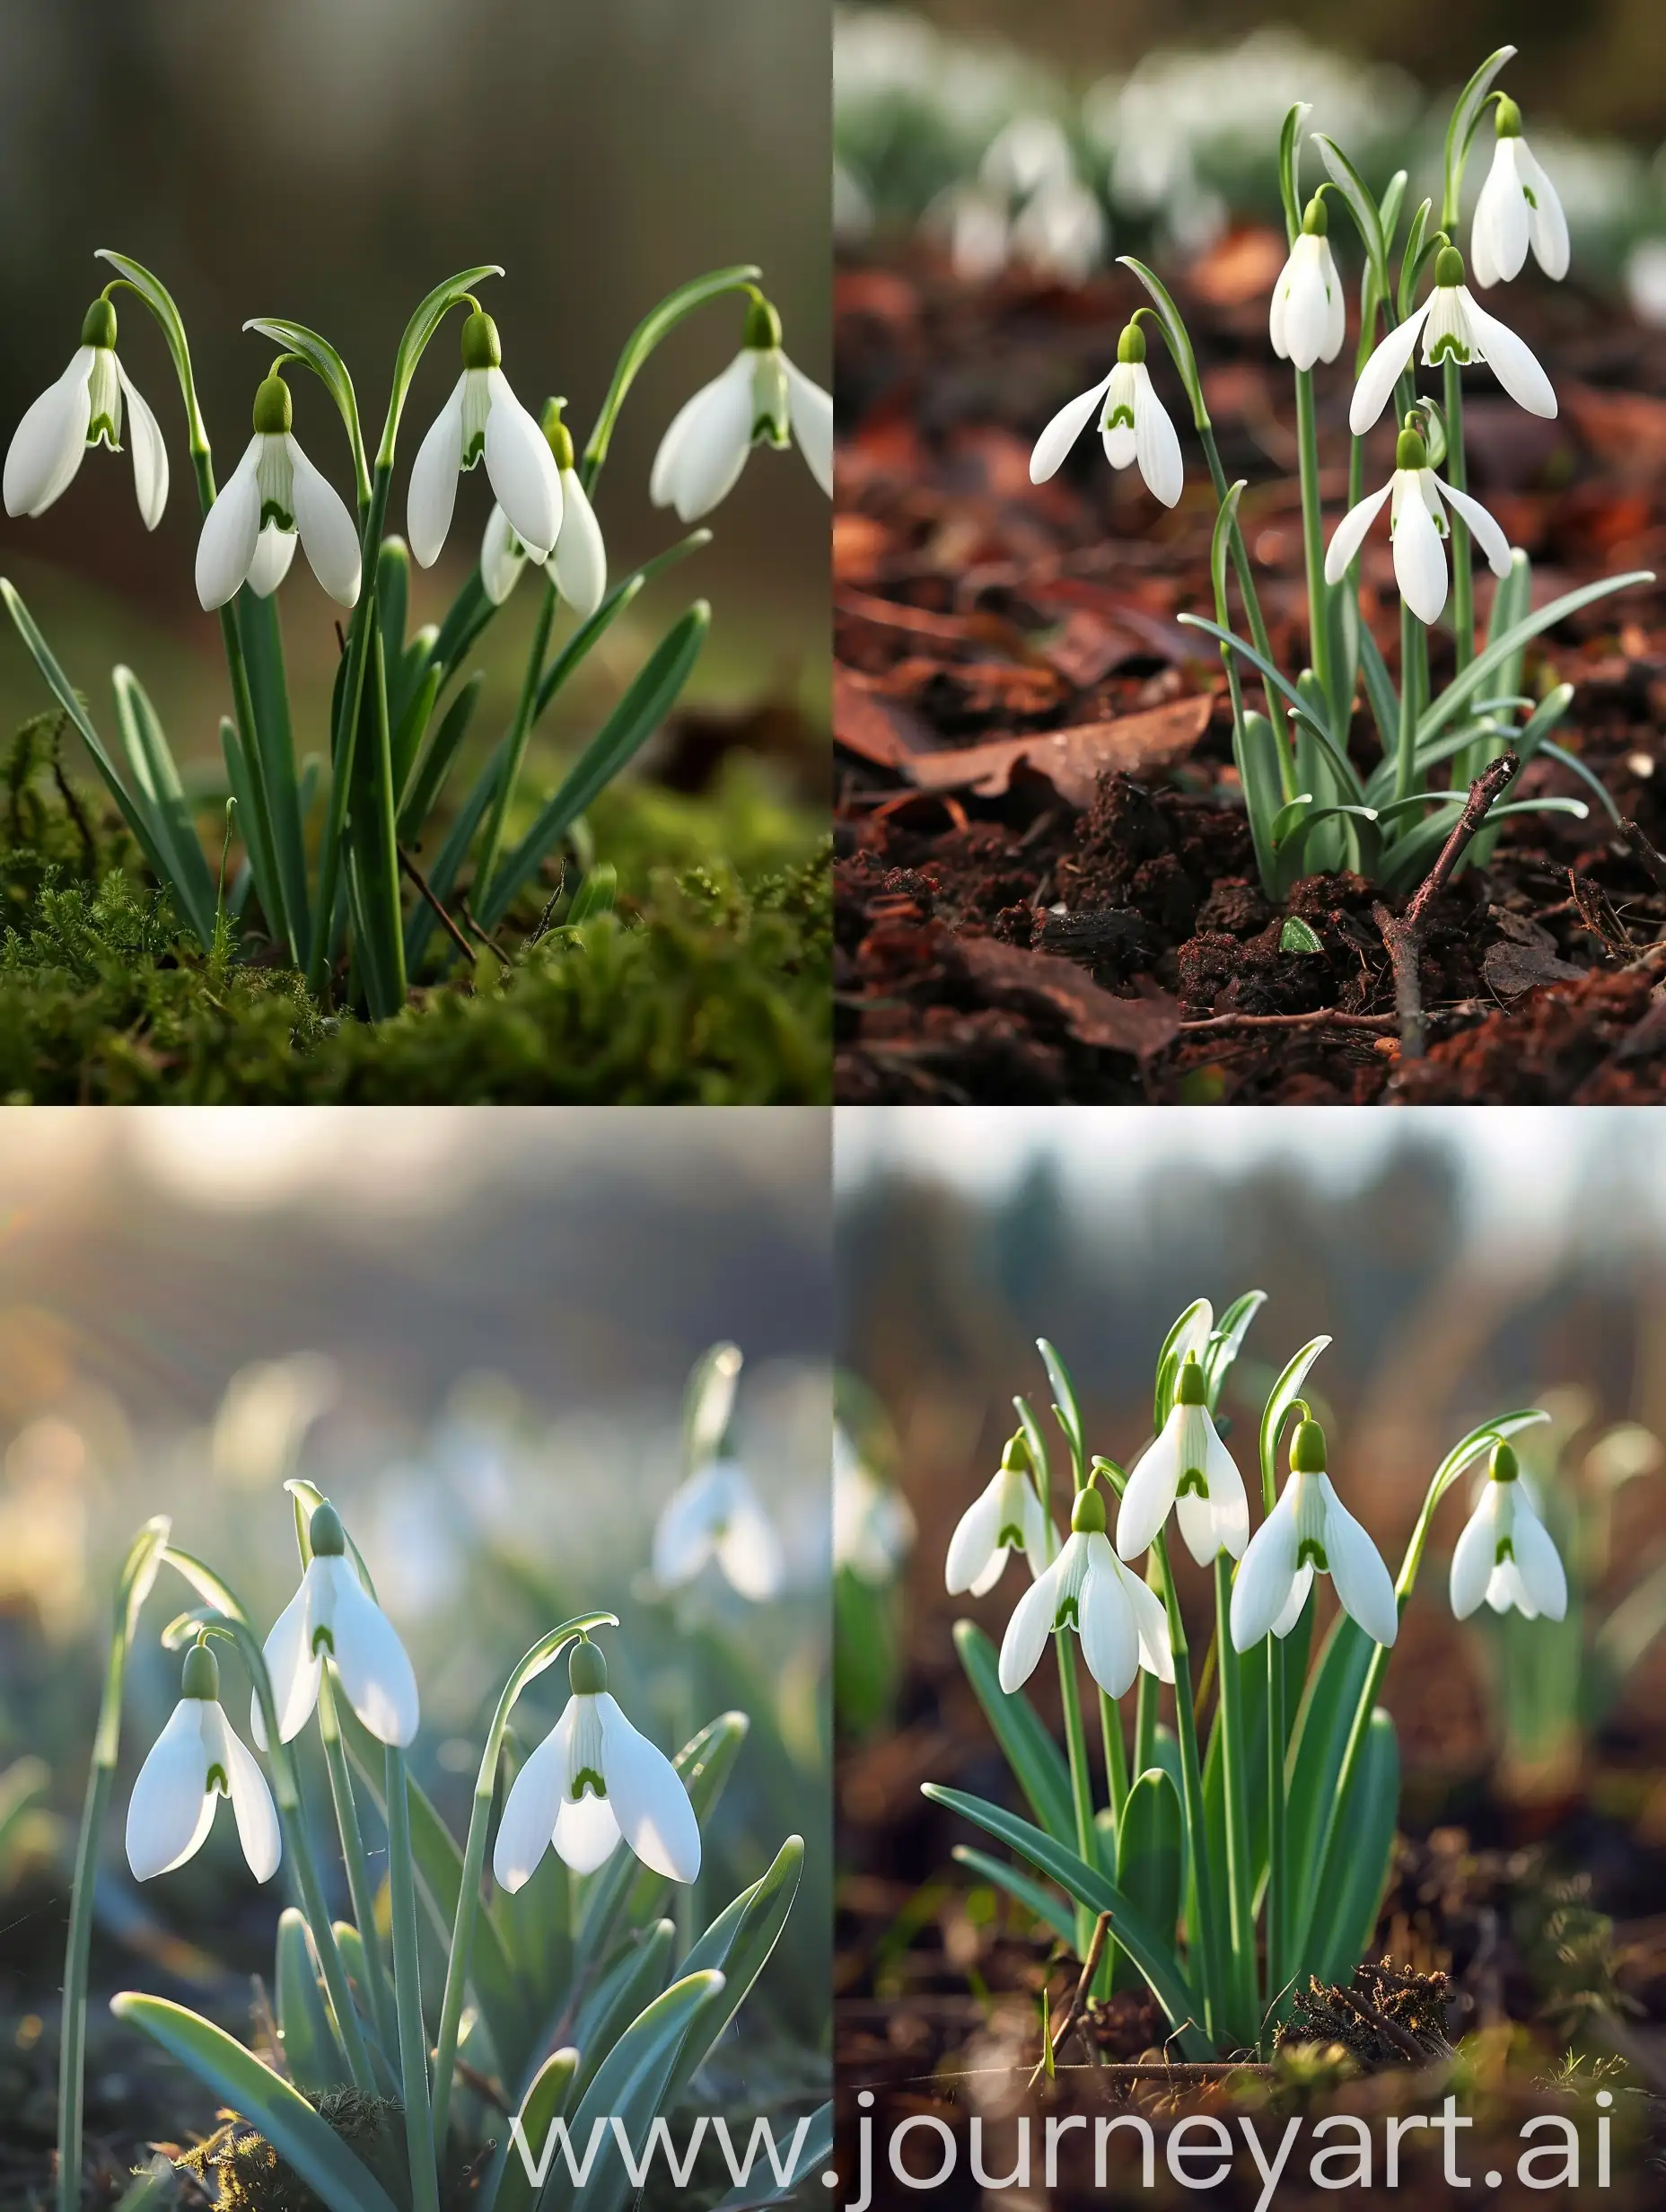 Vibrant-Spring-Snowdrop-Flowers-in-Full-Bloom